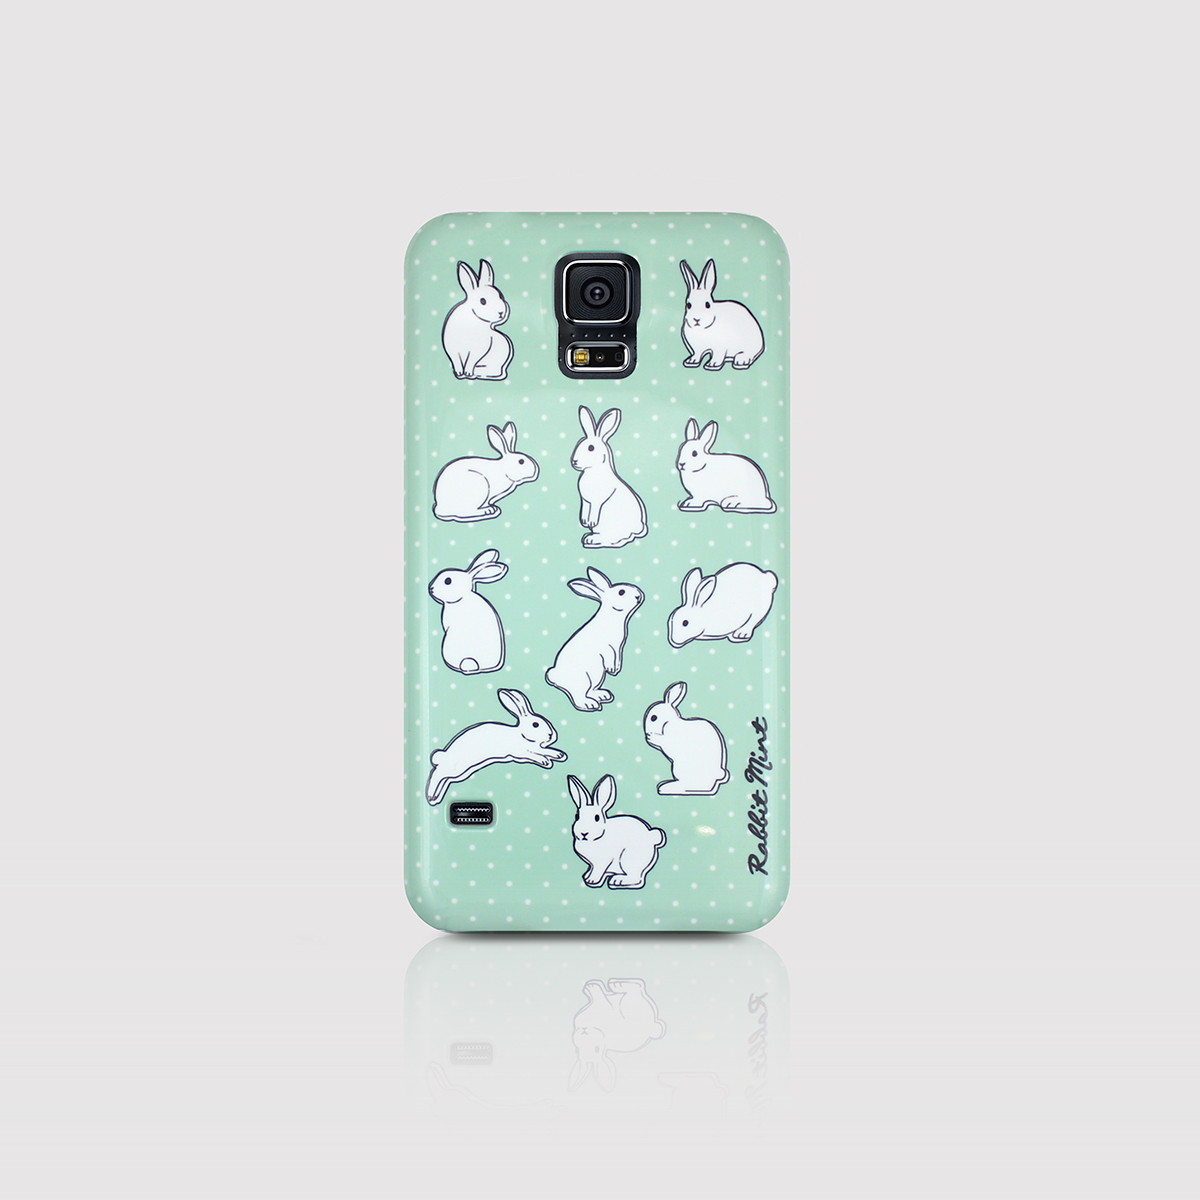 Samsung Galaxy S5 Case - Rabbit & Mint Polka Dot (p00051)